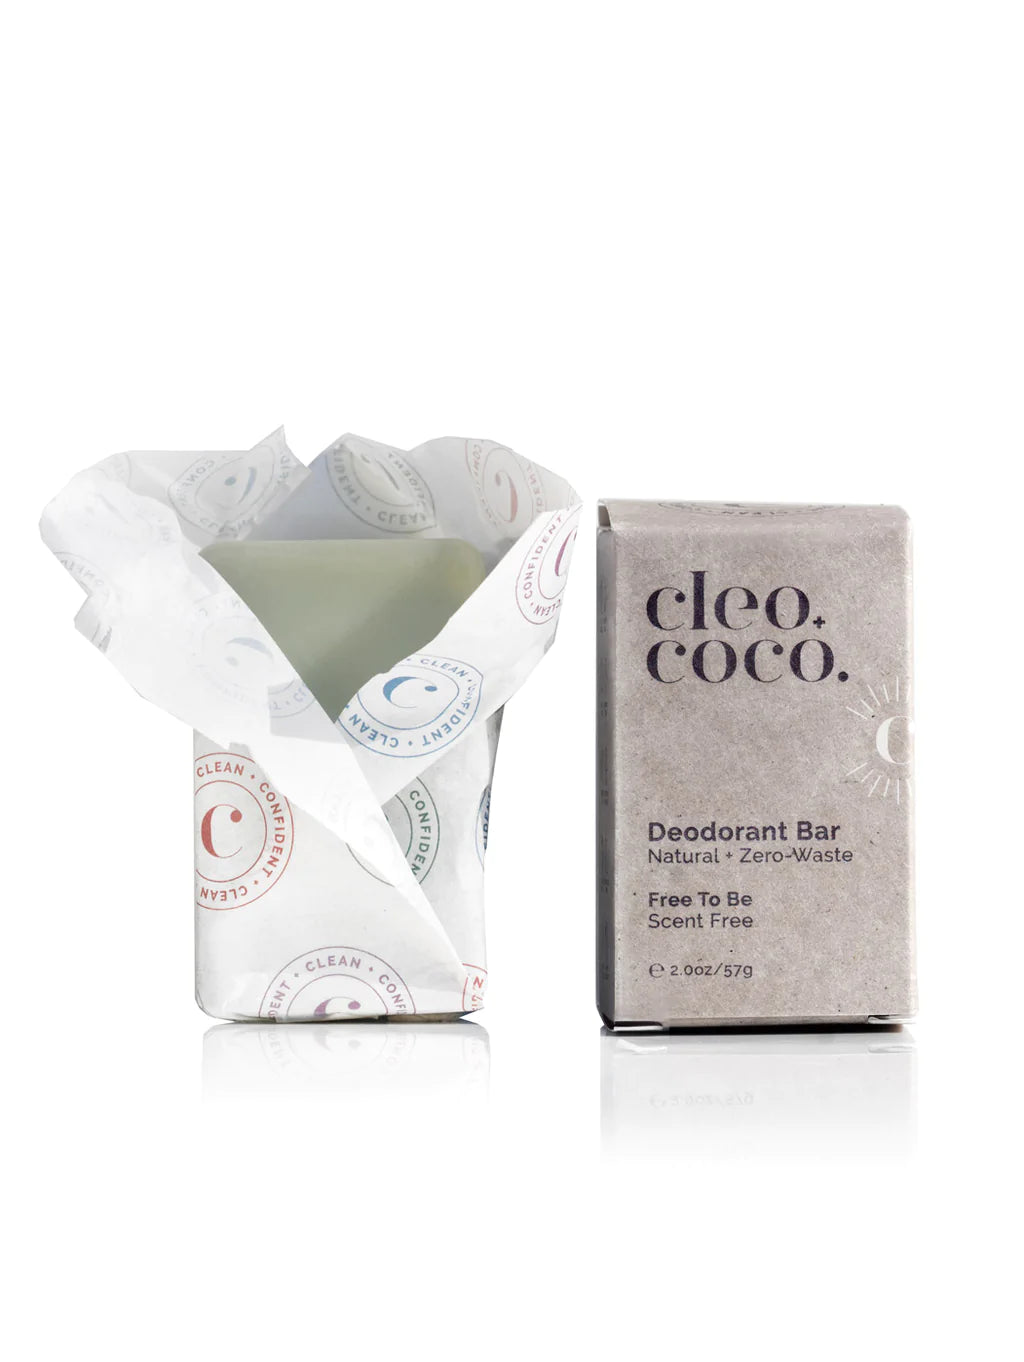 CLEO + COCO NATURAL | Deodorant BAR, Zero Waste 2.0